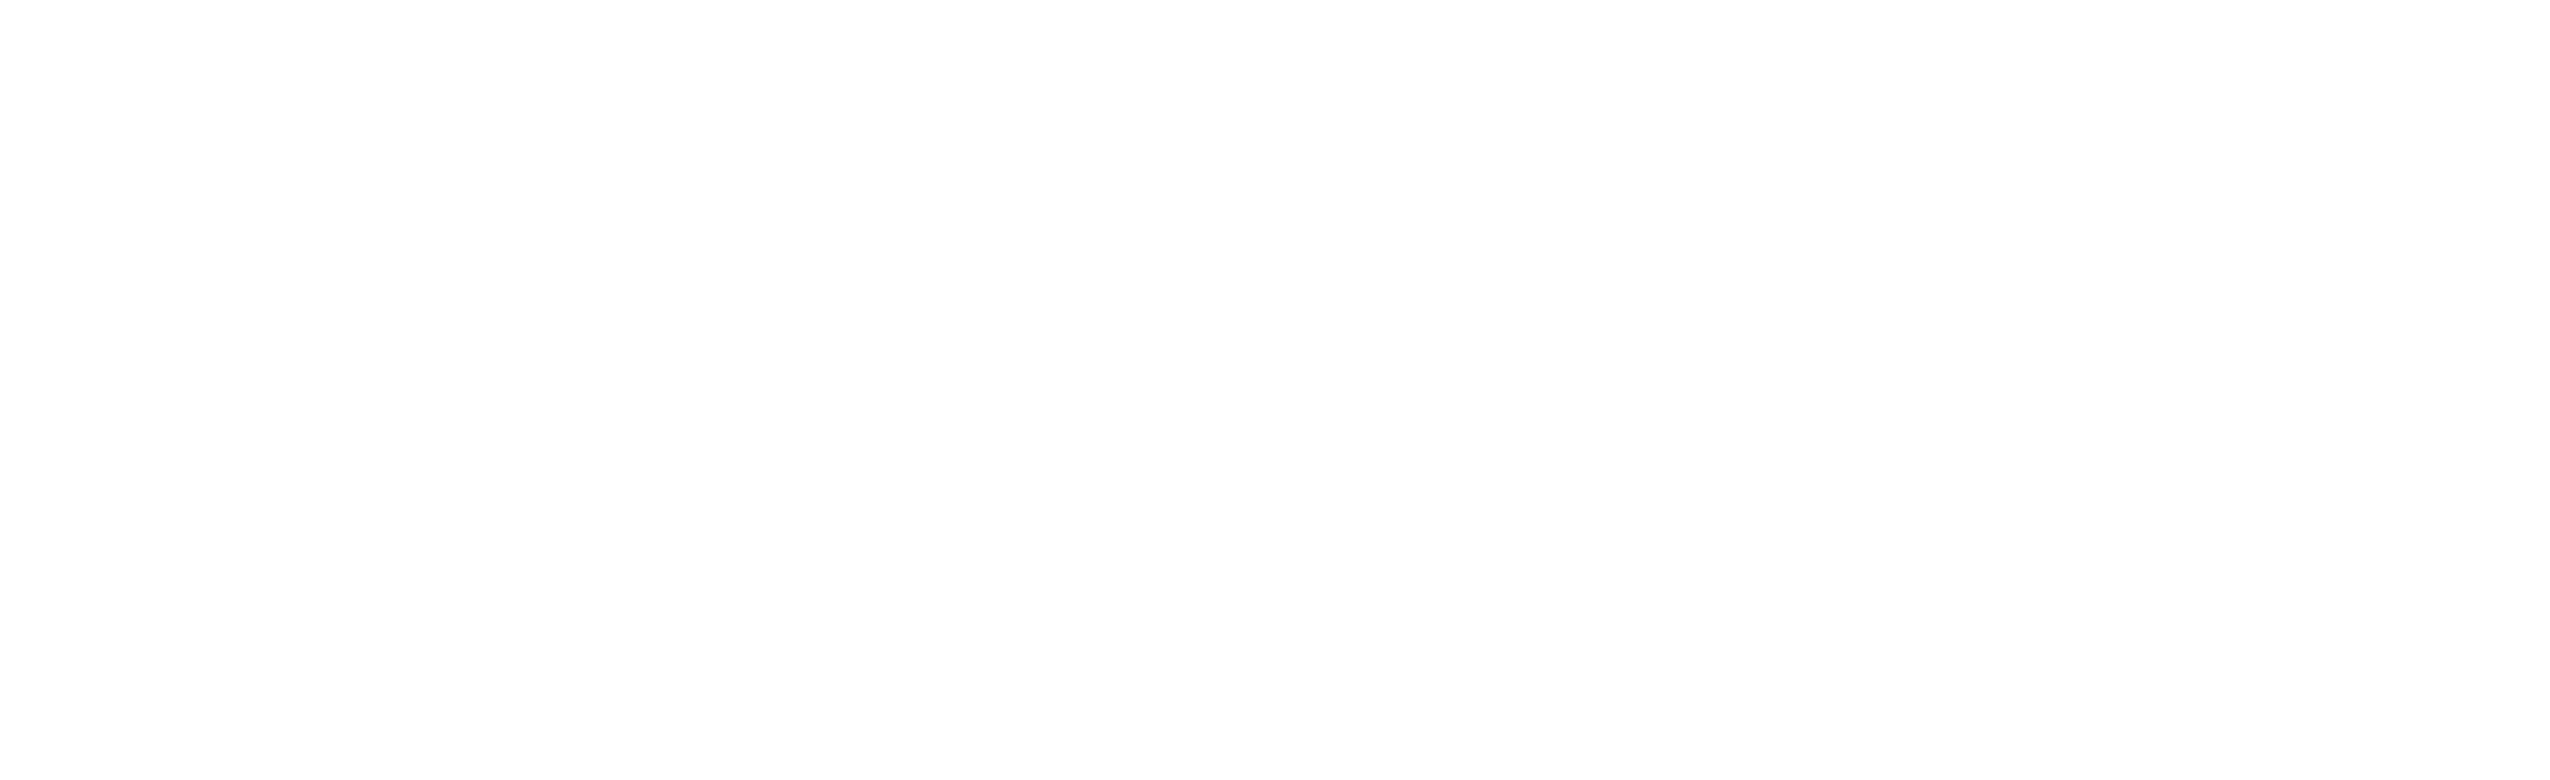 YoloTD Logo in white.